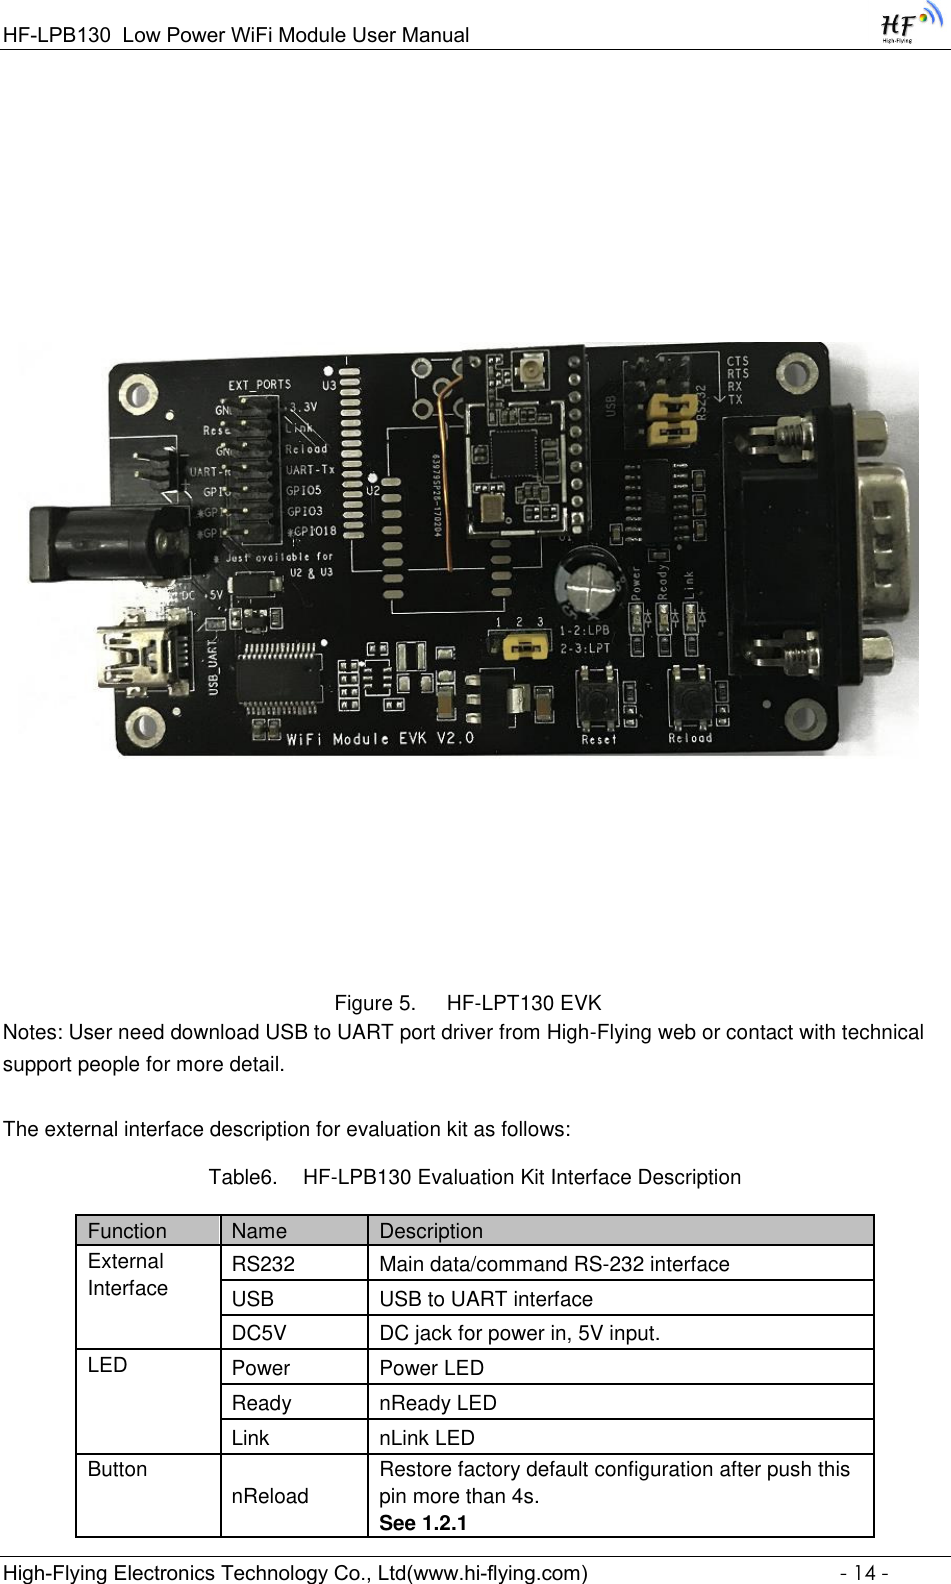 Page 14 of High Flying Electronics Technology HF-LPB130 Wi-Fi Module User Manual GPON SFU System Design